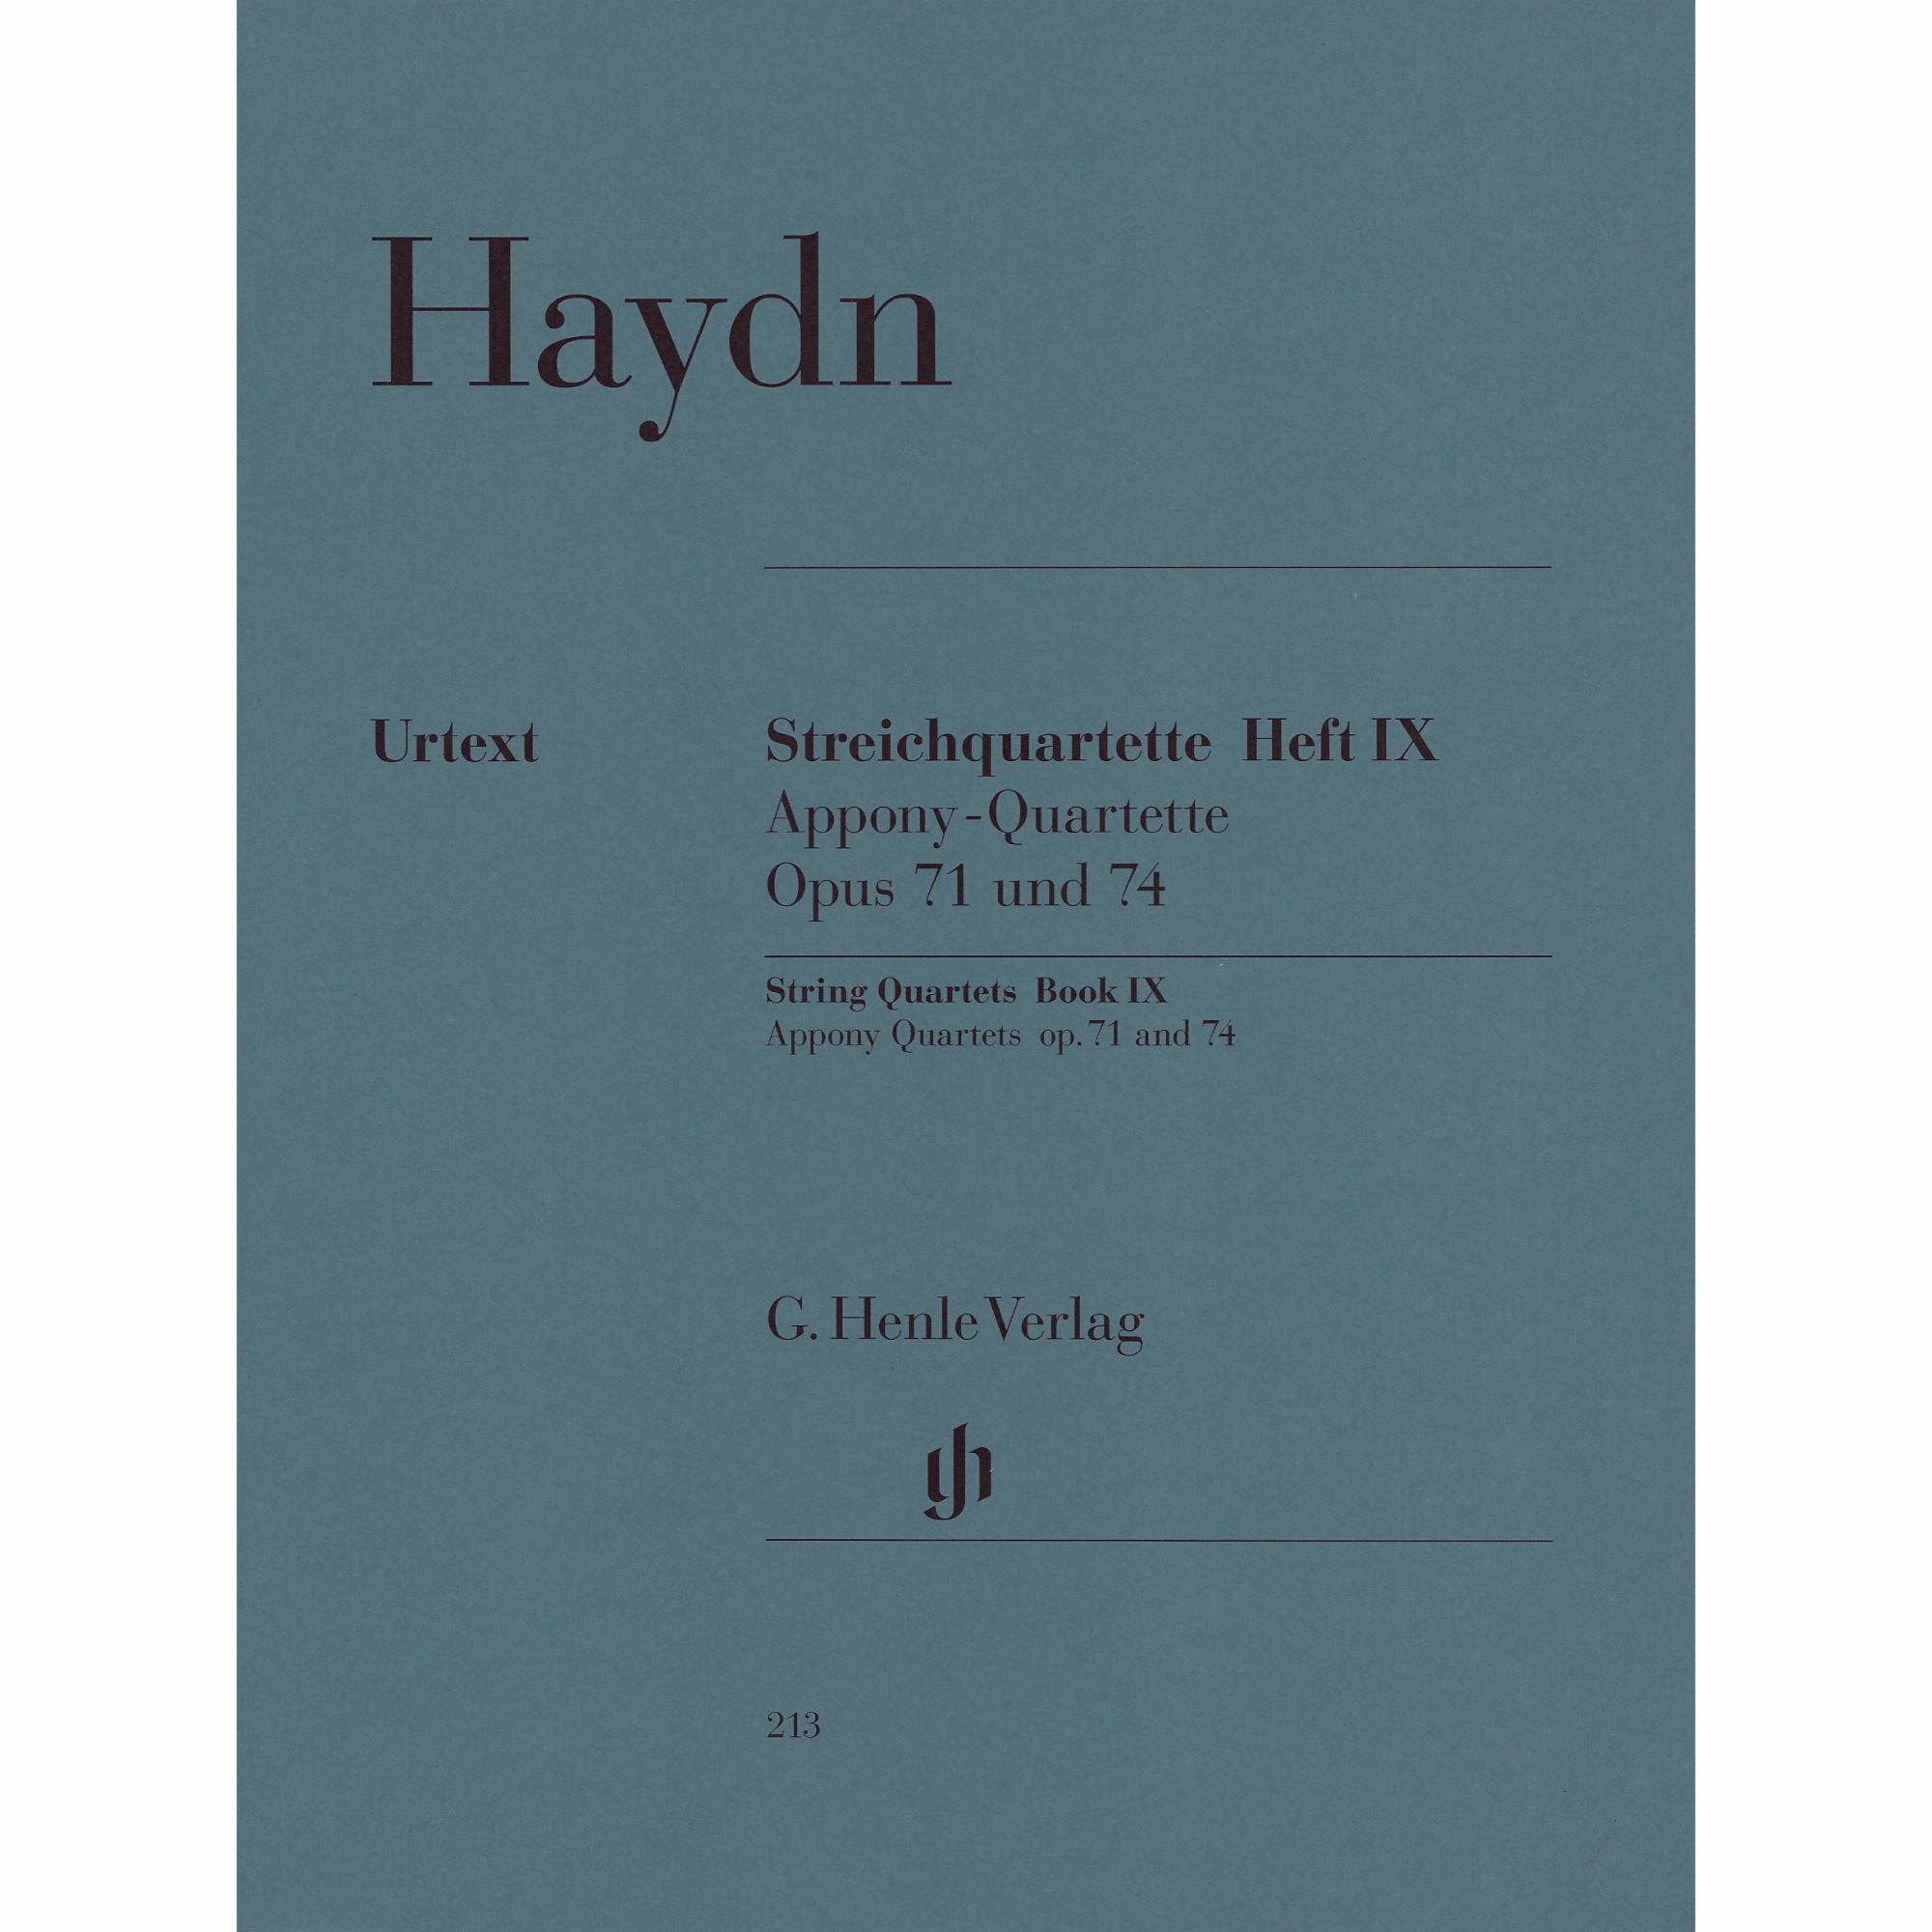 Haydn -- String Quartets, Book IX